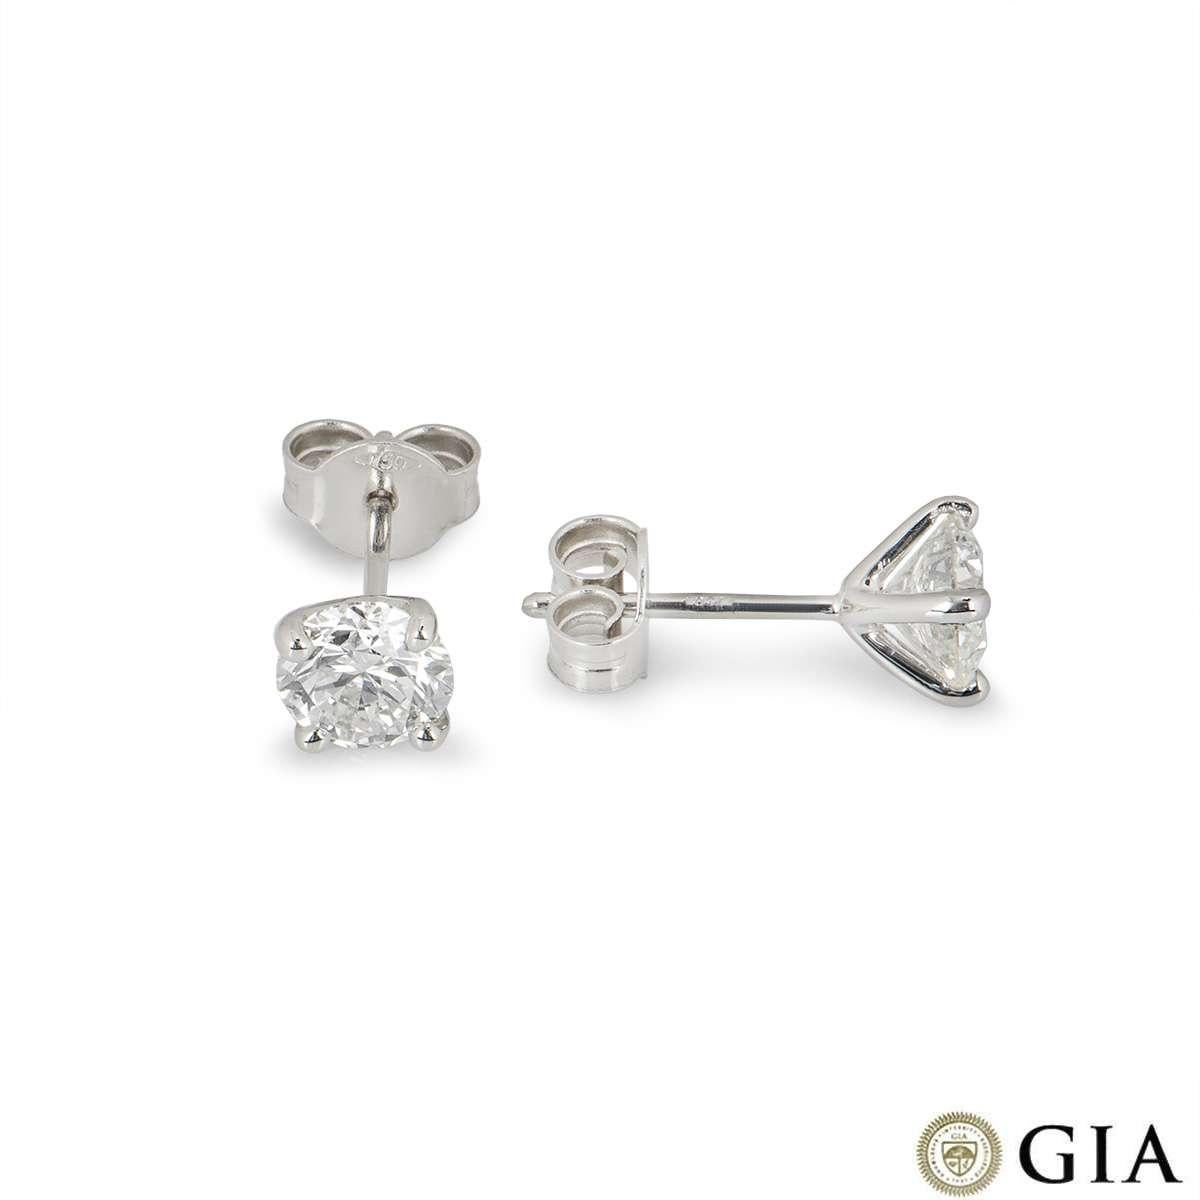 Round Cut GIA Certified Round Brilliant Cut Diamond Stud Earrings 1.49 Carat